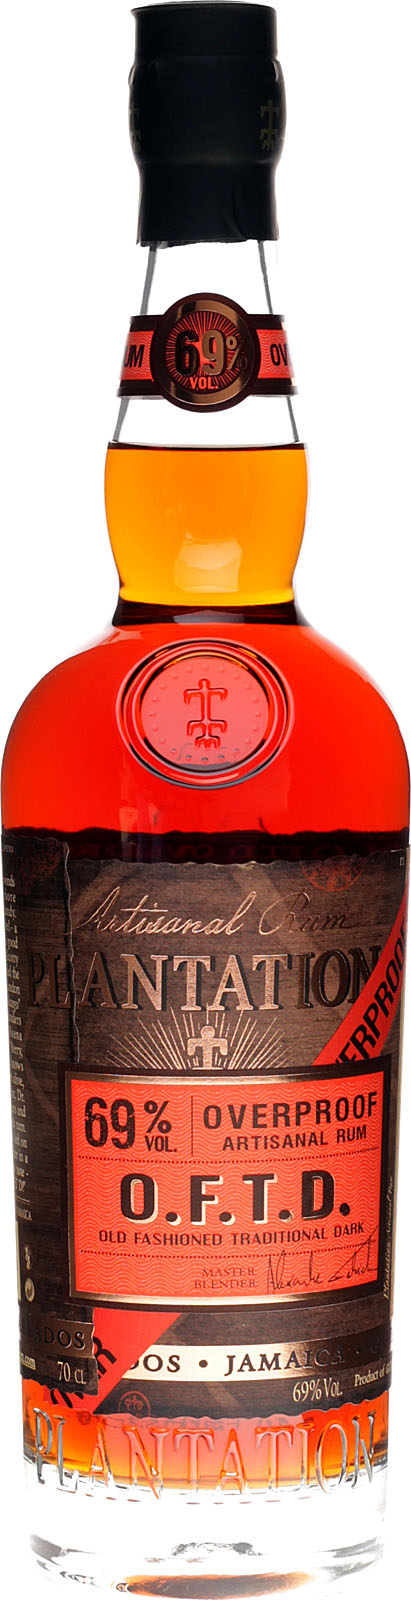 Plantation O.F.T.D. Overproof Rum aus der Karibik